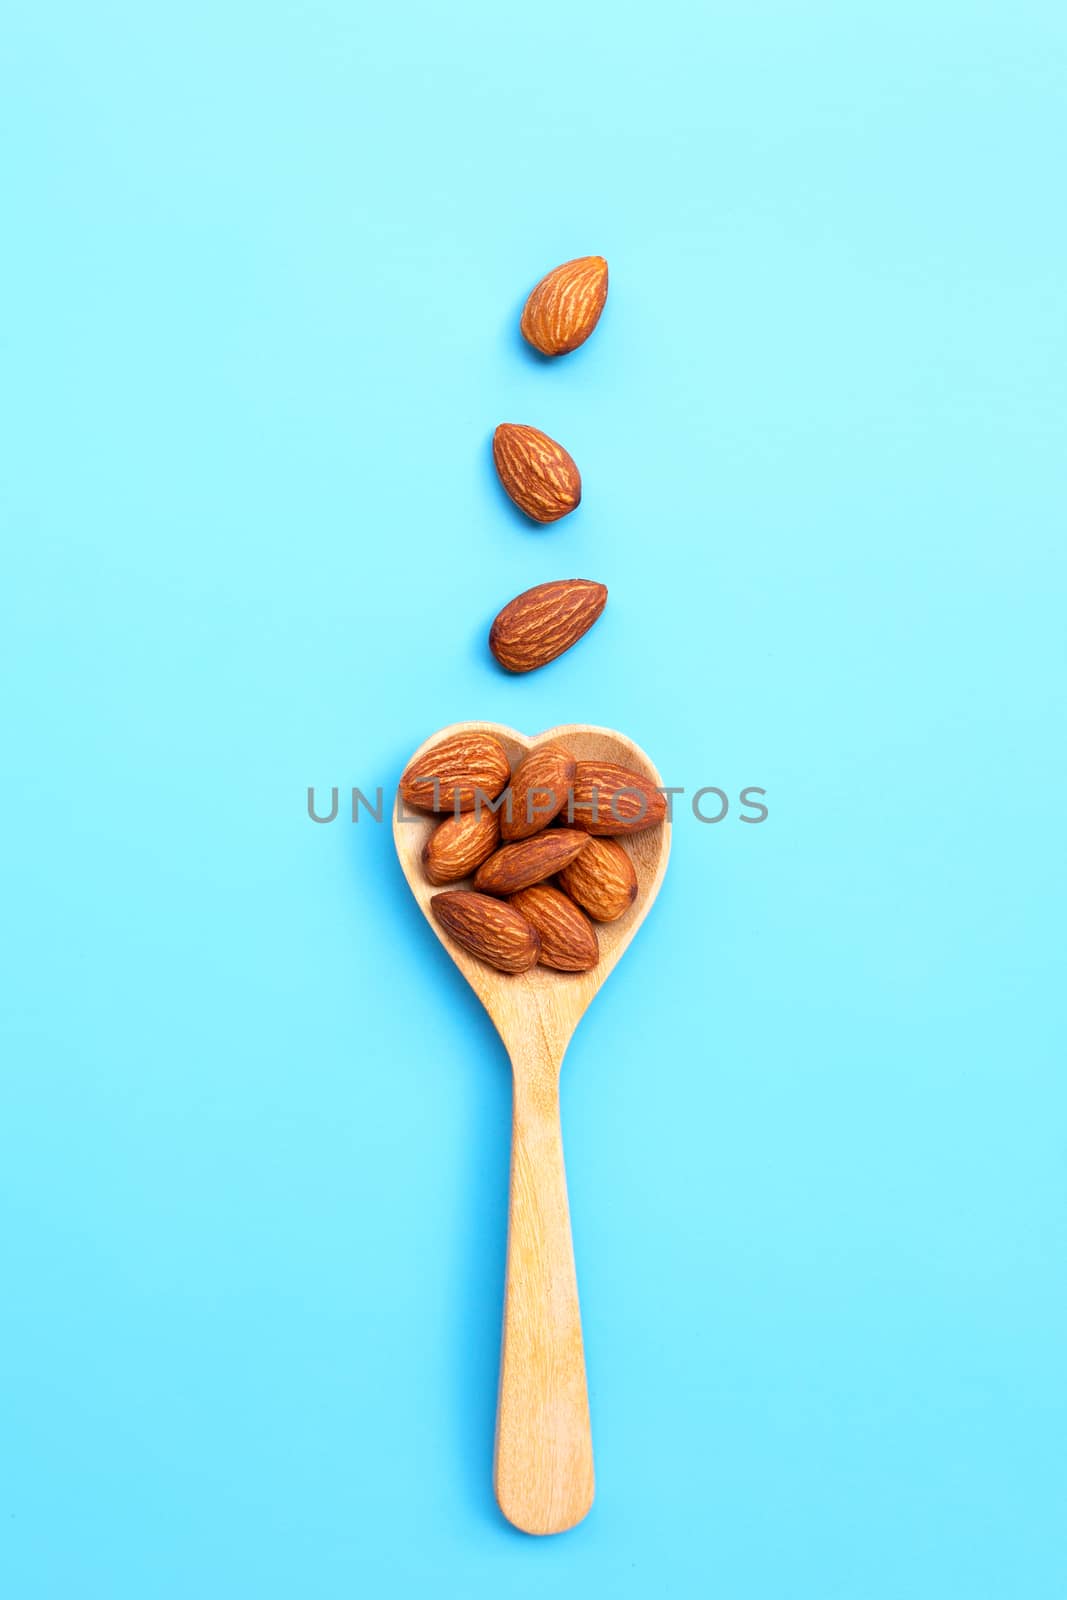 Almonds on heart shape wooden spoon on blue background.  by Bowonpat